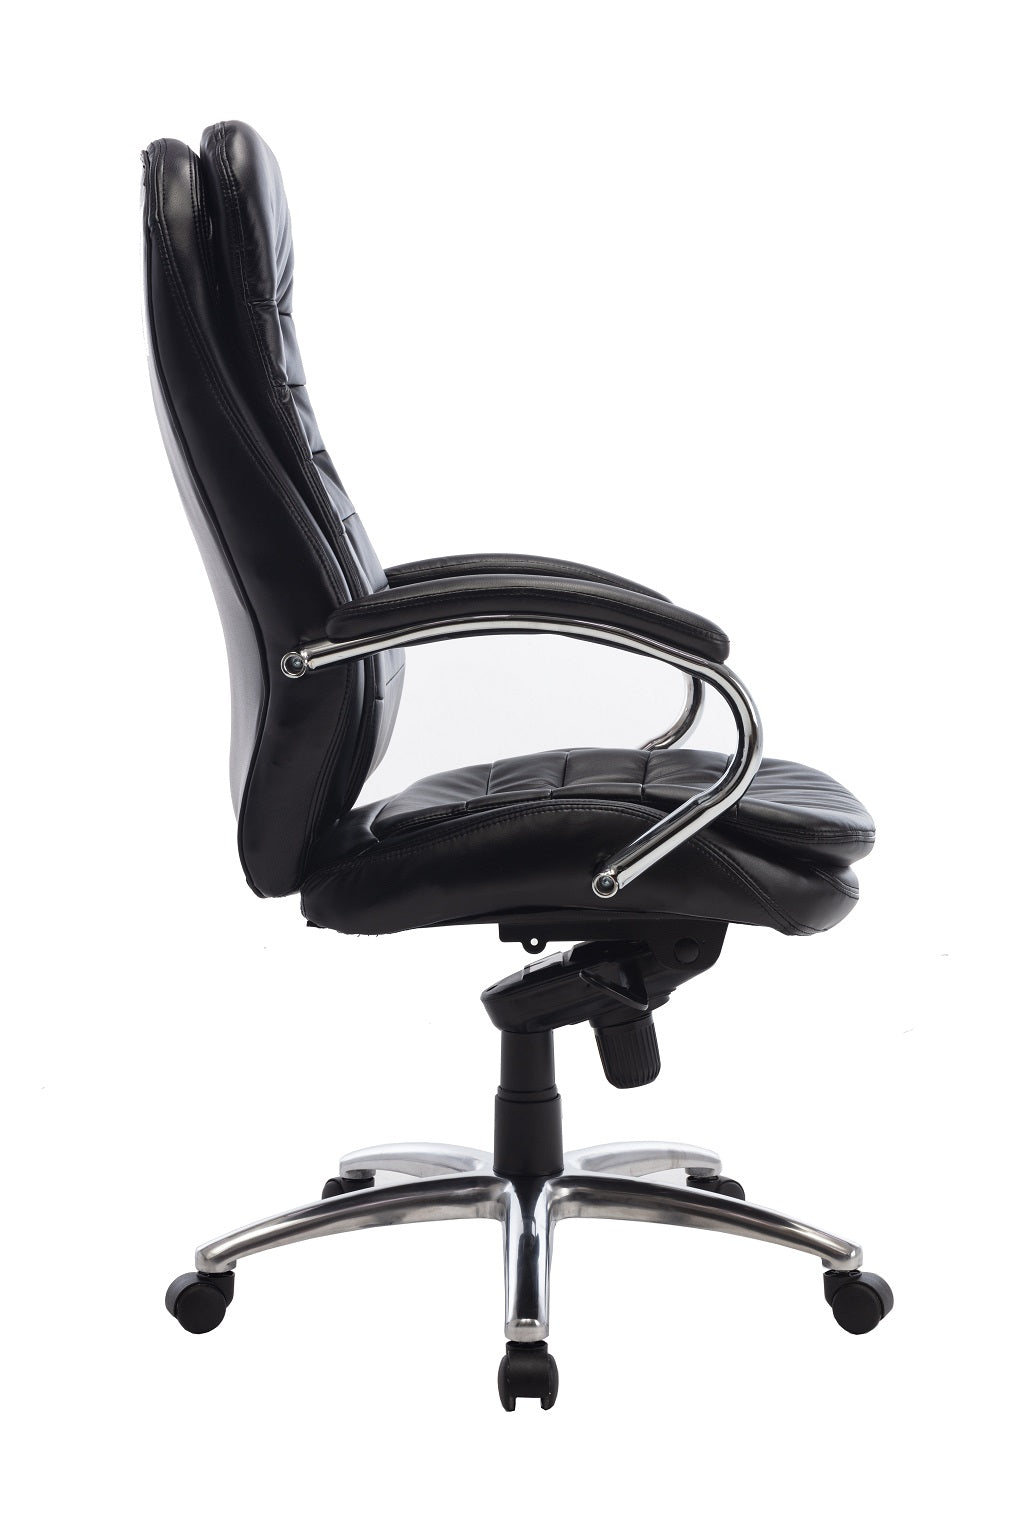 ViscoLogic Splendor Padded Seat and High Backrest Executive Home Office Desk Chair (Black)